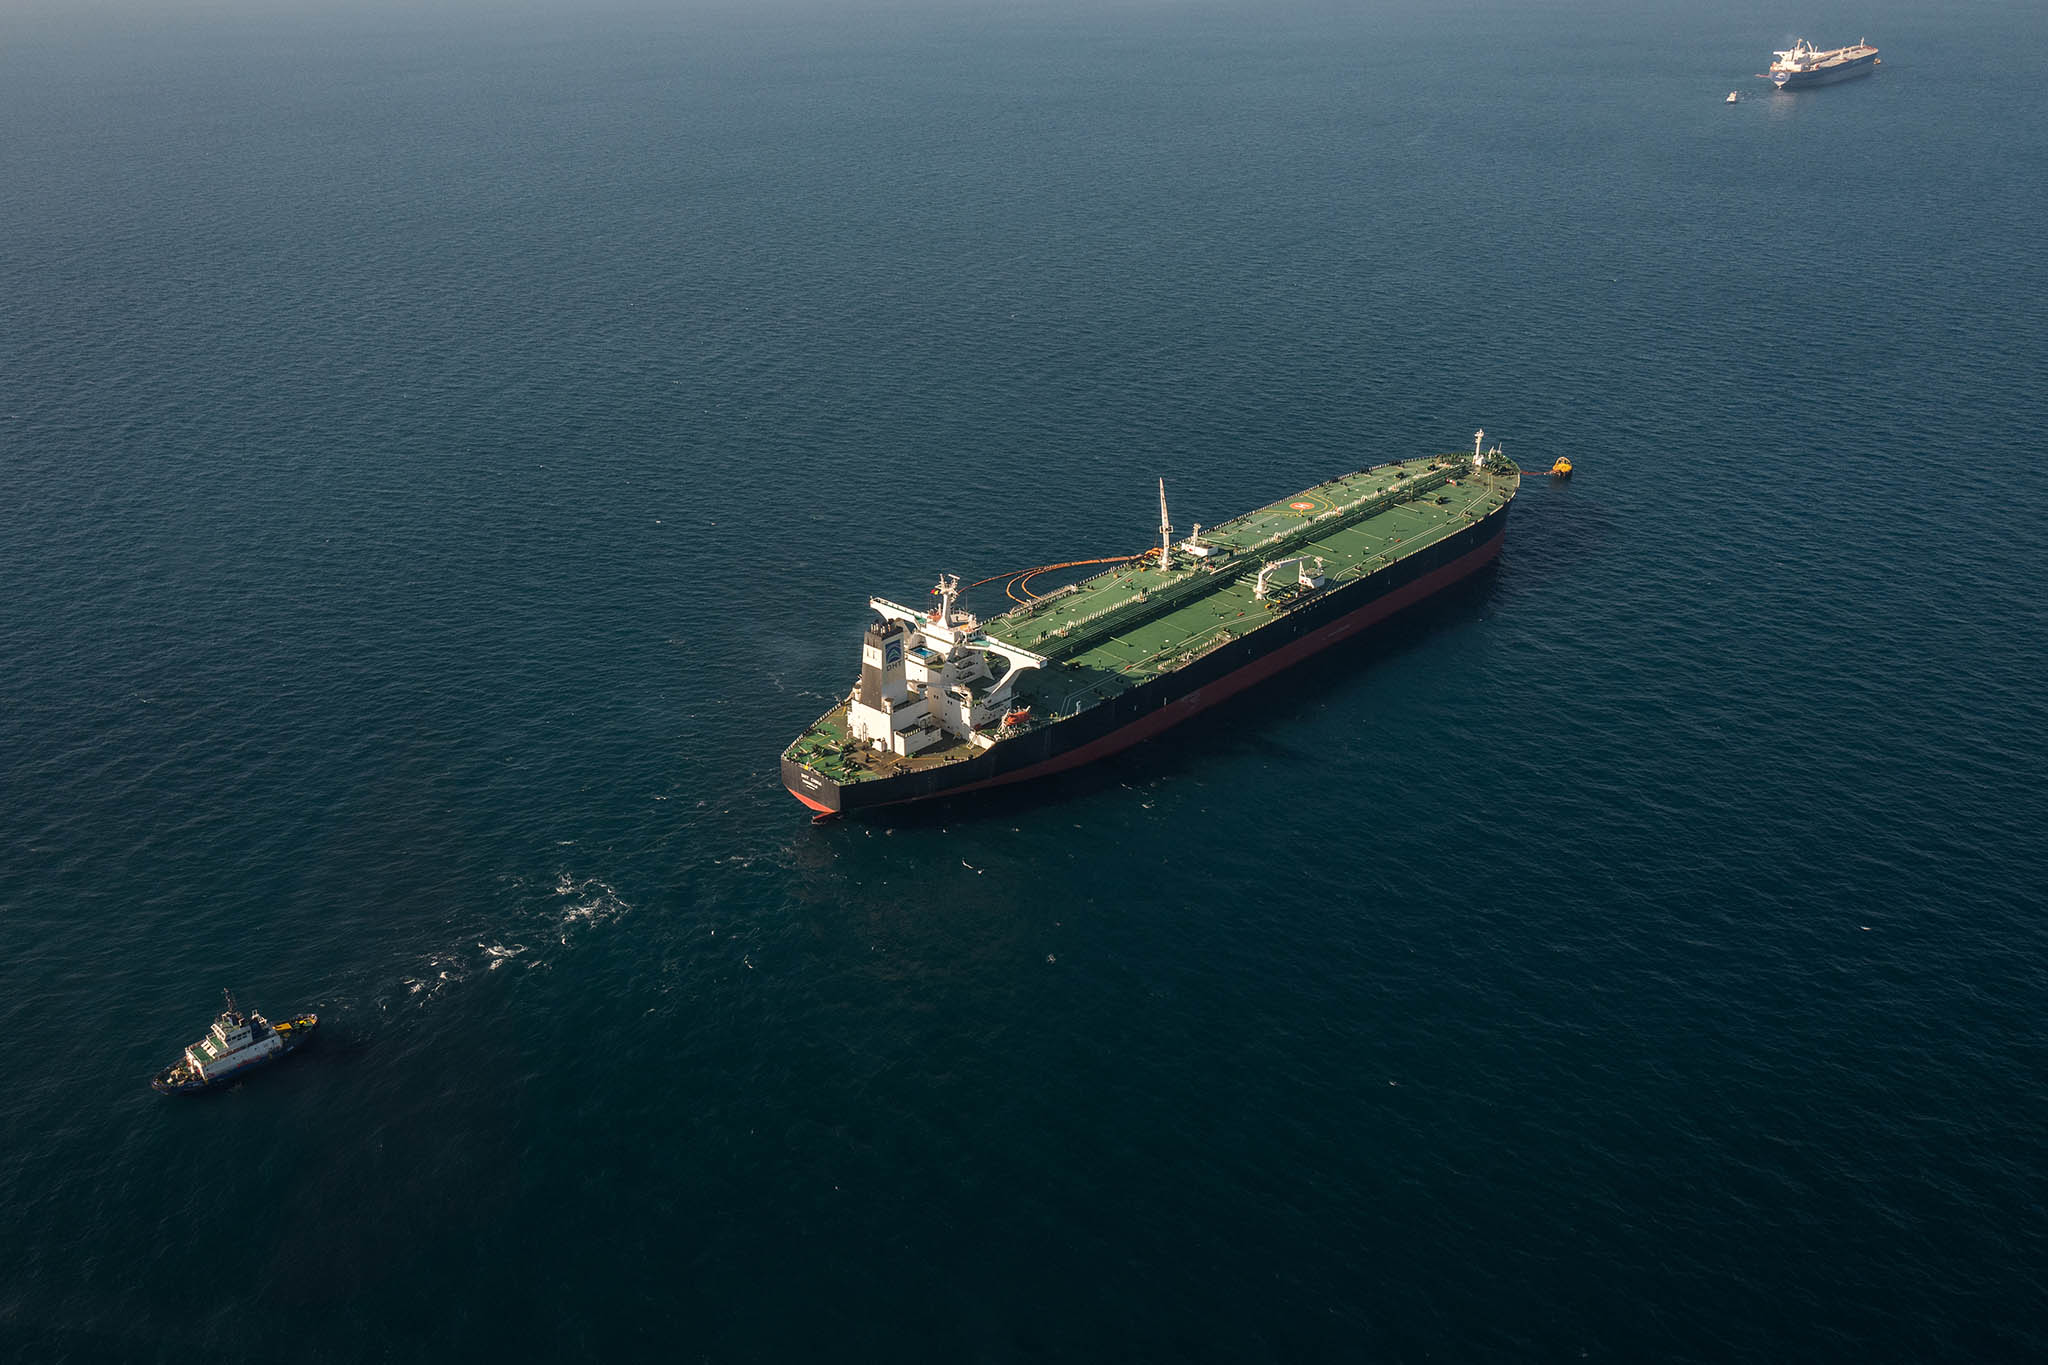 Oil tankers near the seaport of Ras Tanura in Saudi Arabia., Jan. 11, 2018. (Christophe Viseux/The New York Times)